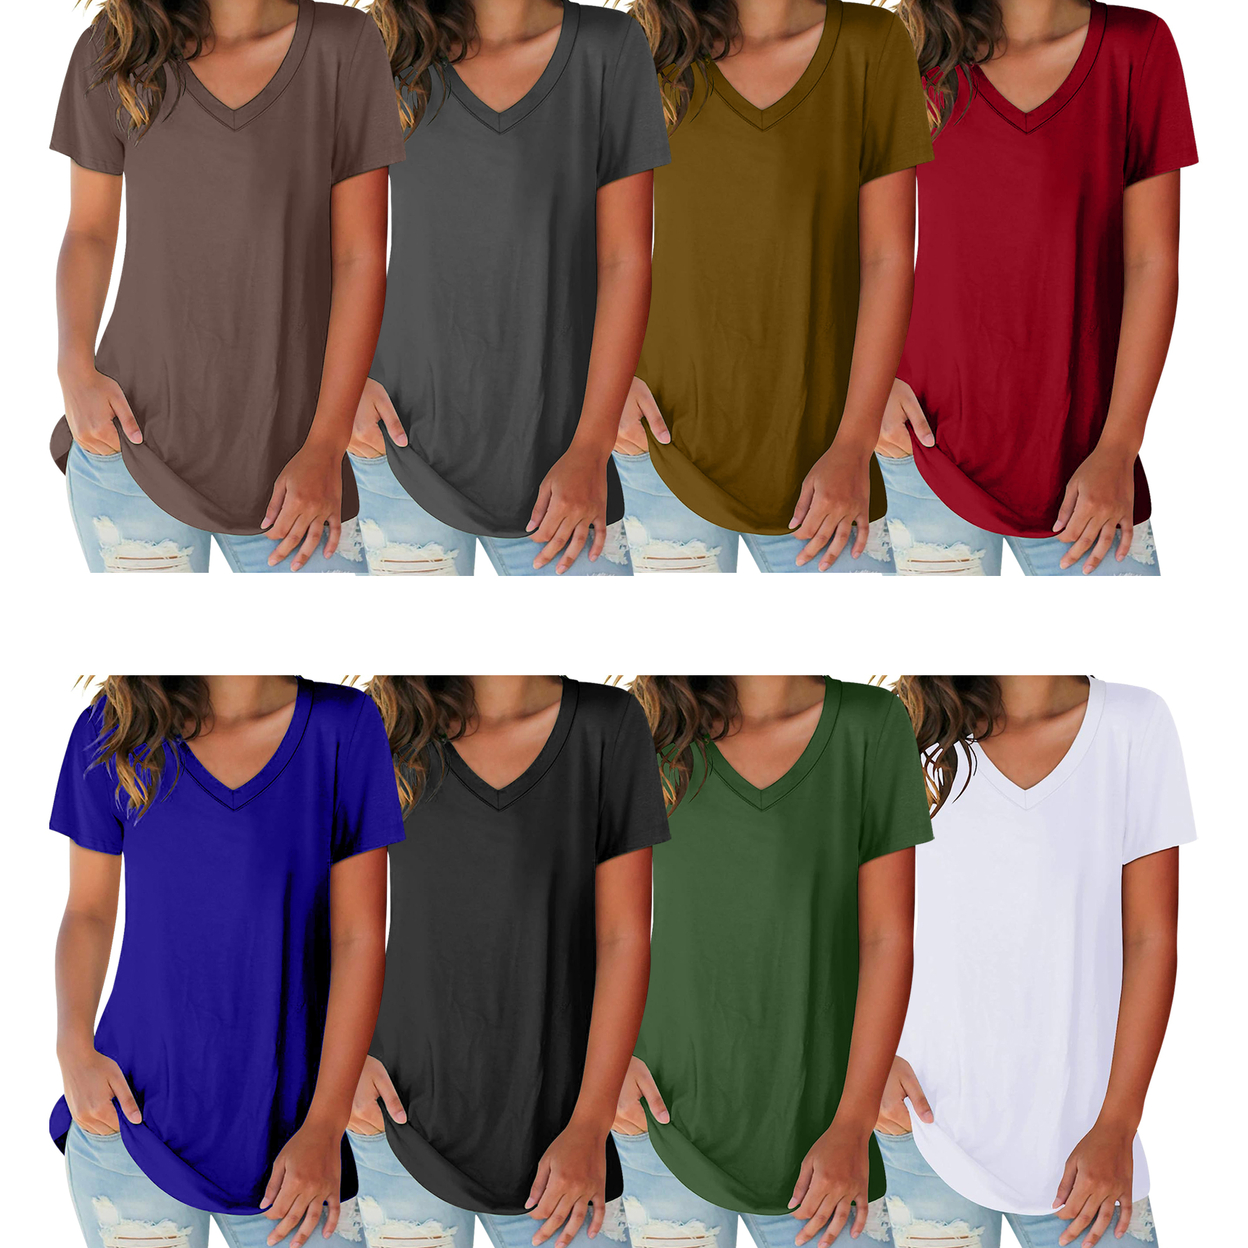 2-Pack: Women's Ultra Soft Smooth Cotton Blend Basic V-Neck Short Sleeve Shirts - Grey & Green, Large